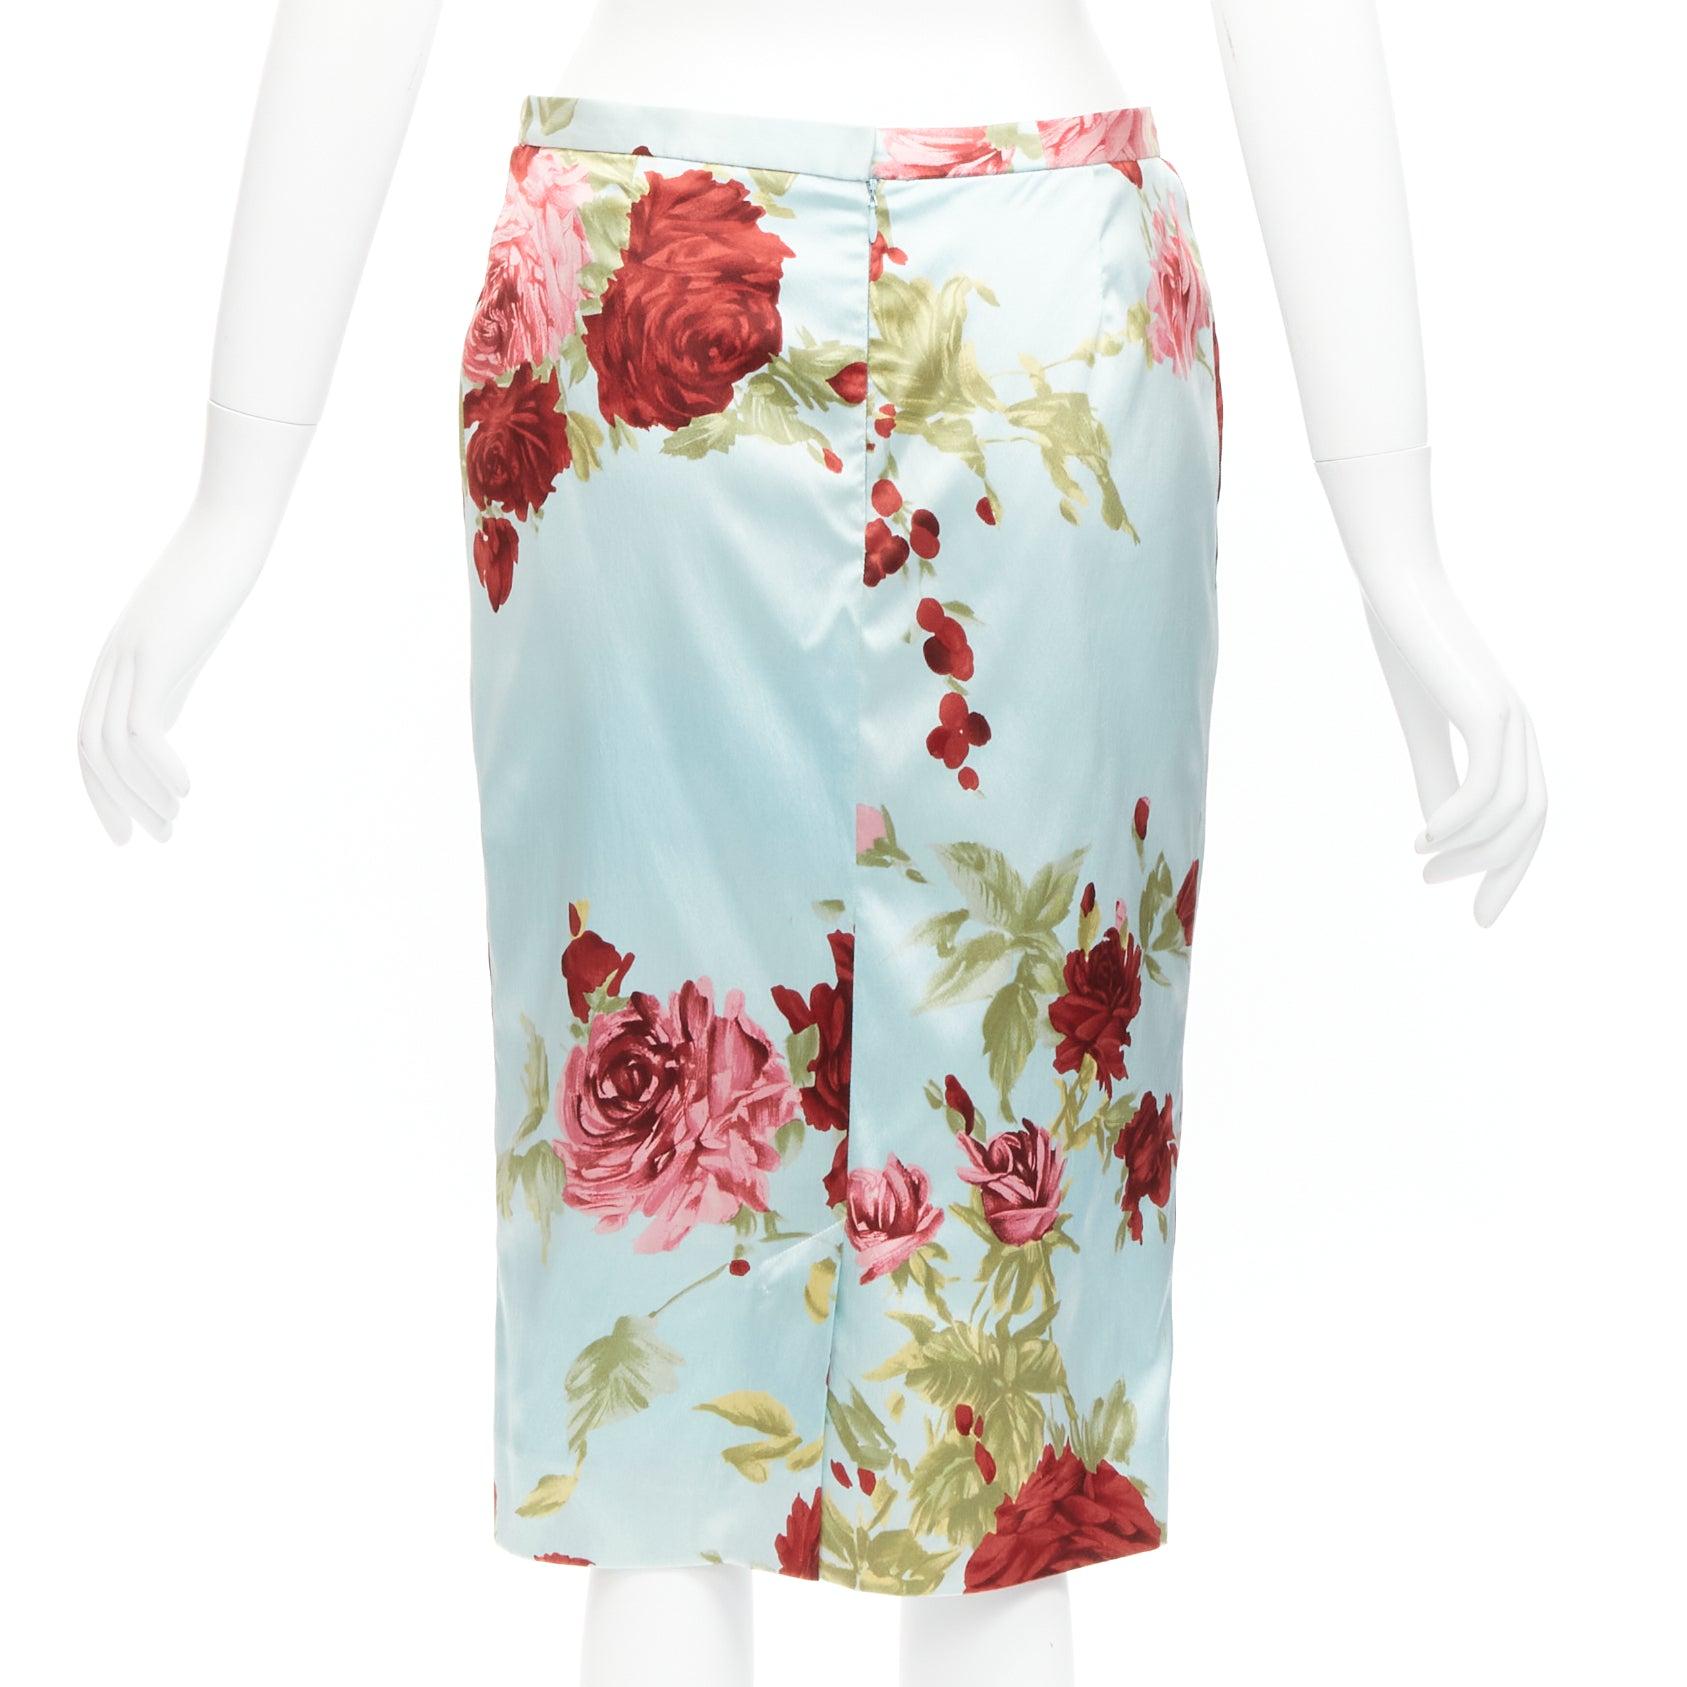 DOLCE GABBANA Vintage floral silk camisole top skirt set IT44 L Carrie Bradshaw For Sale 4